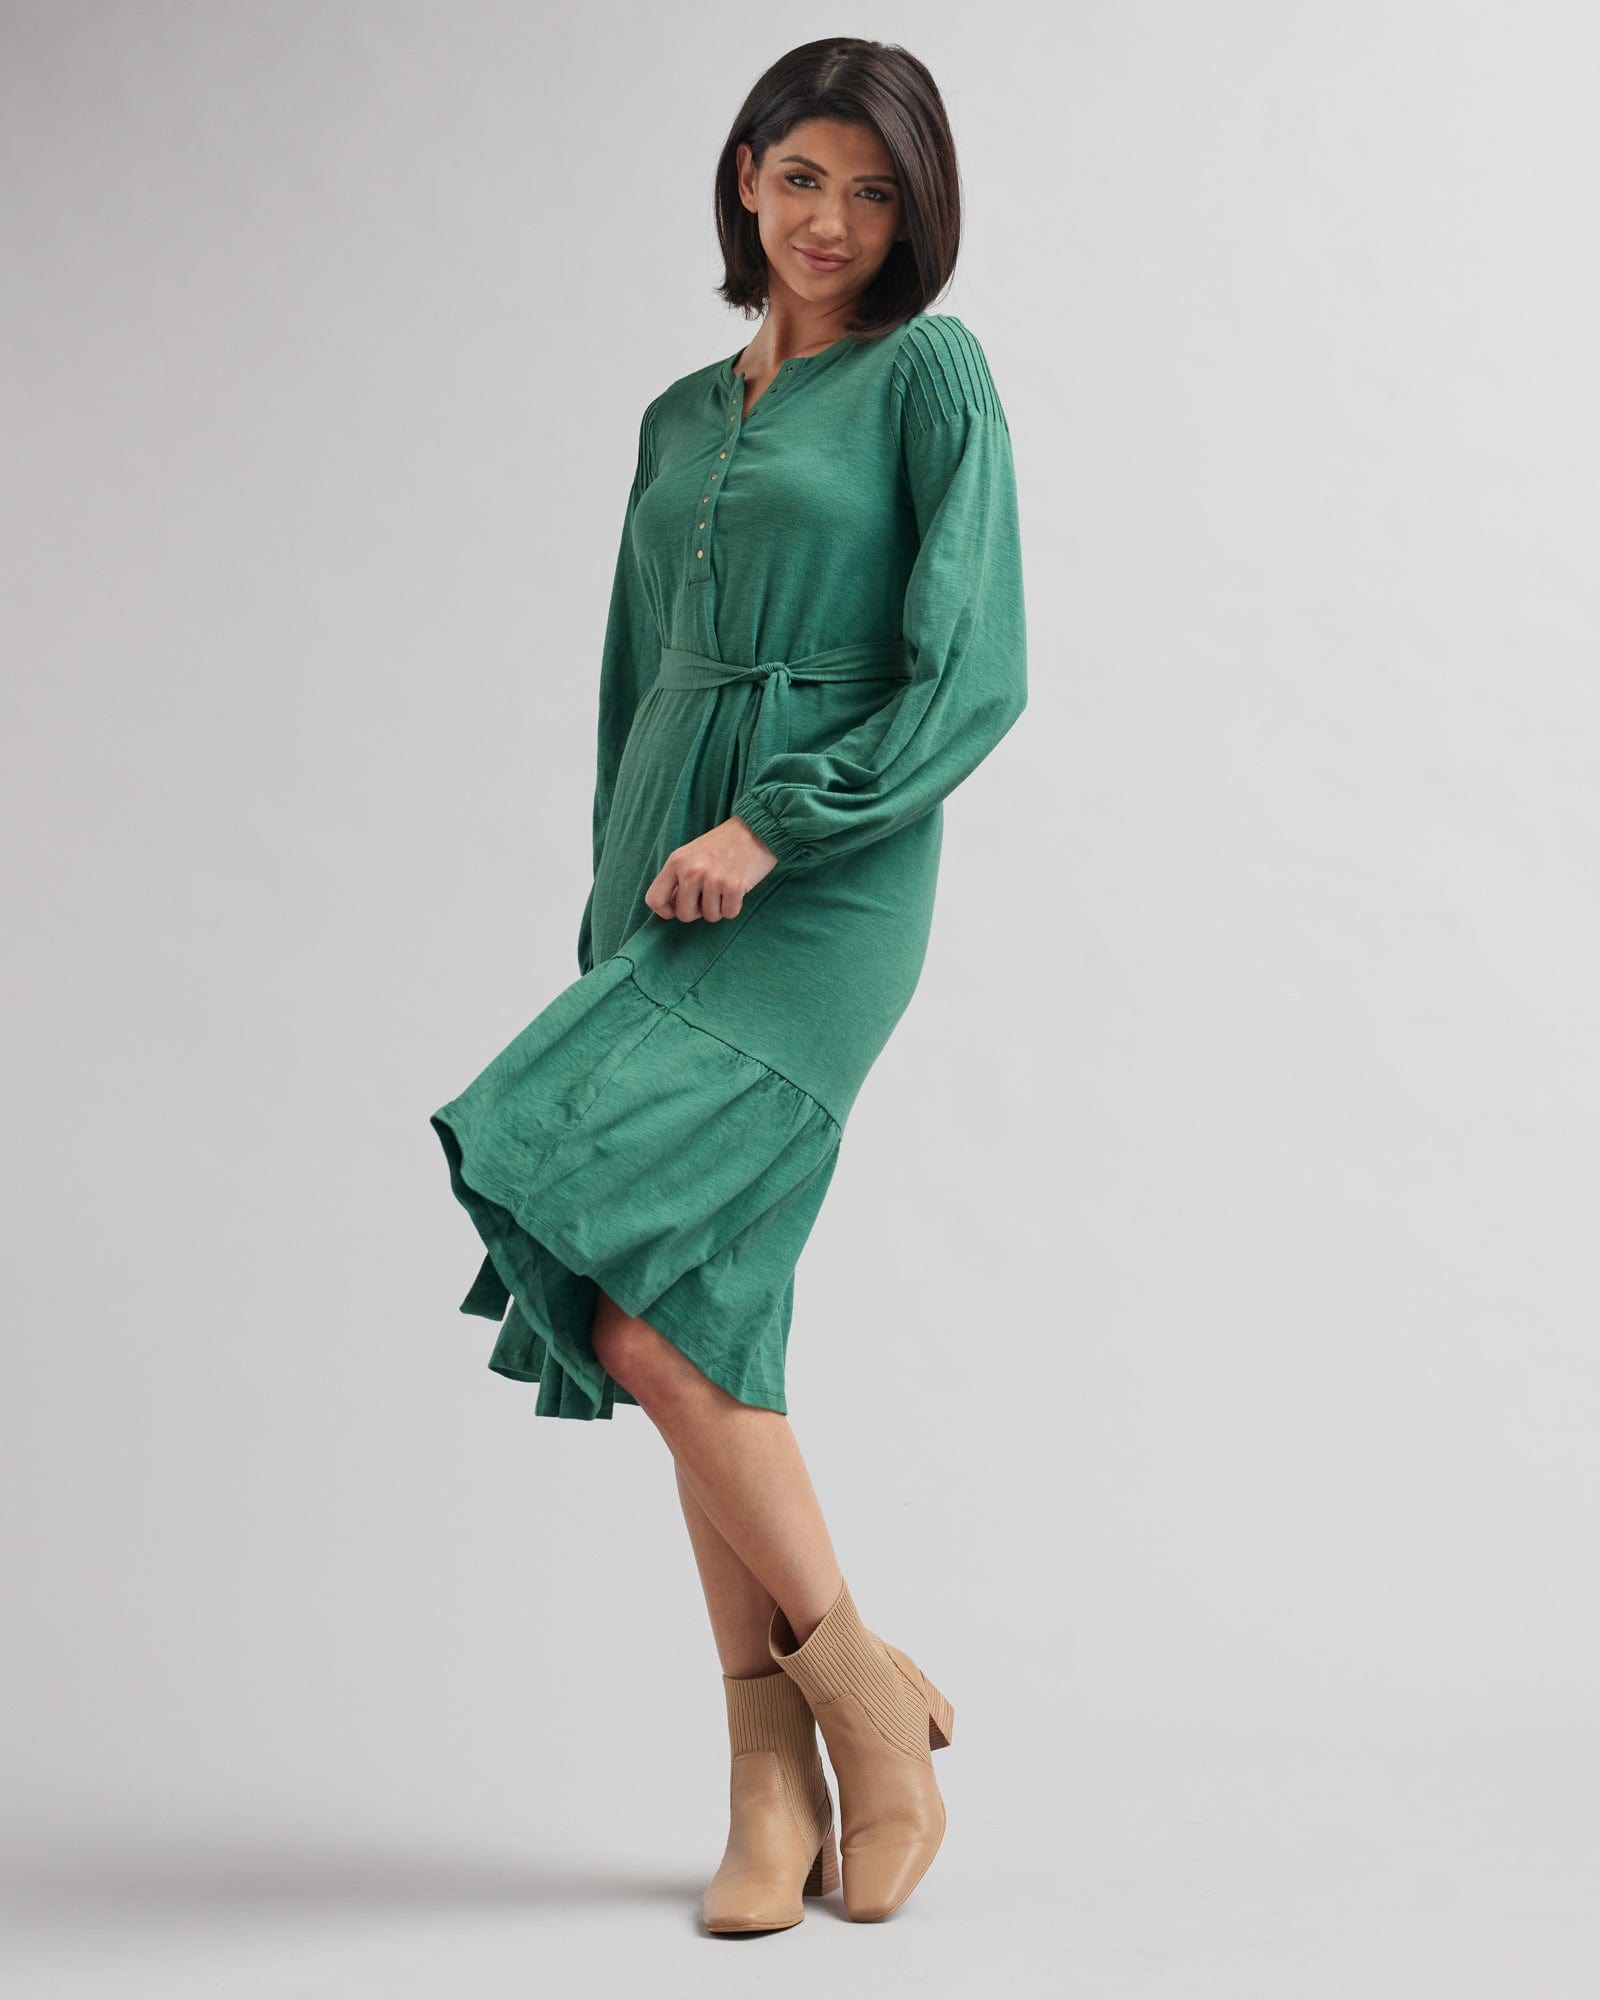 Woman in a long sleeve, midi-length, green dress